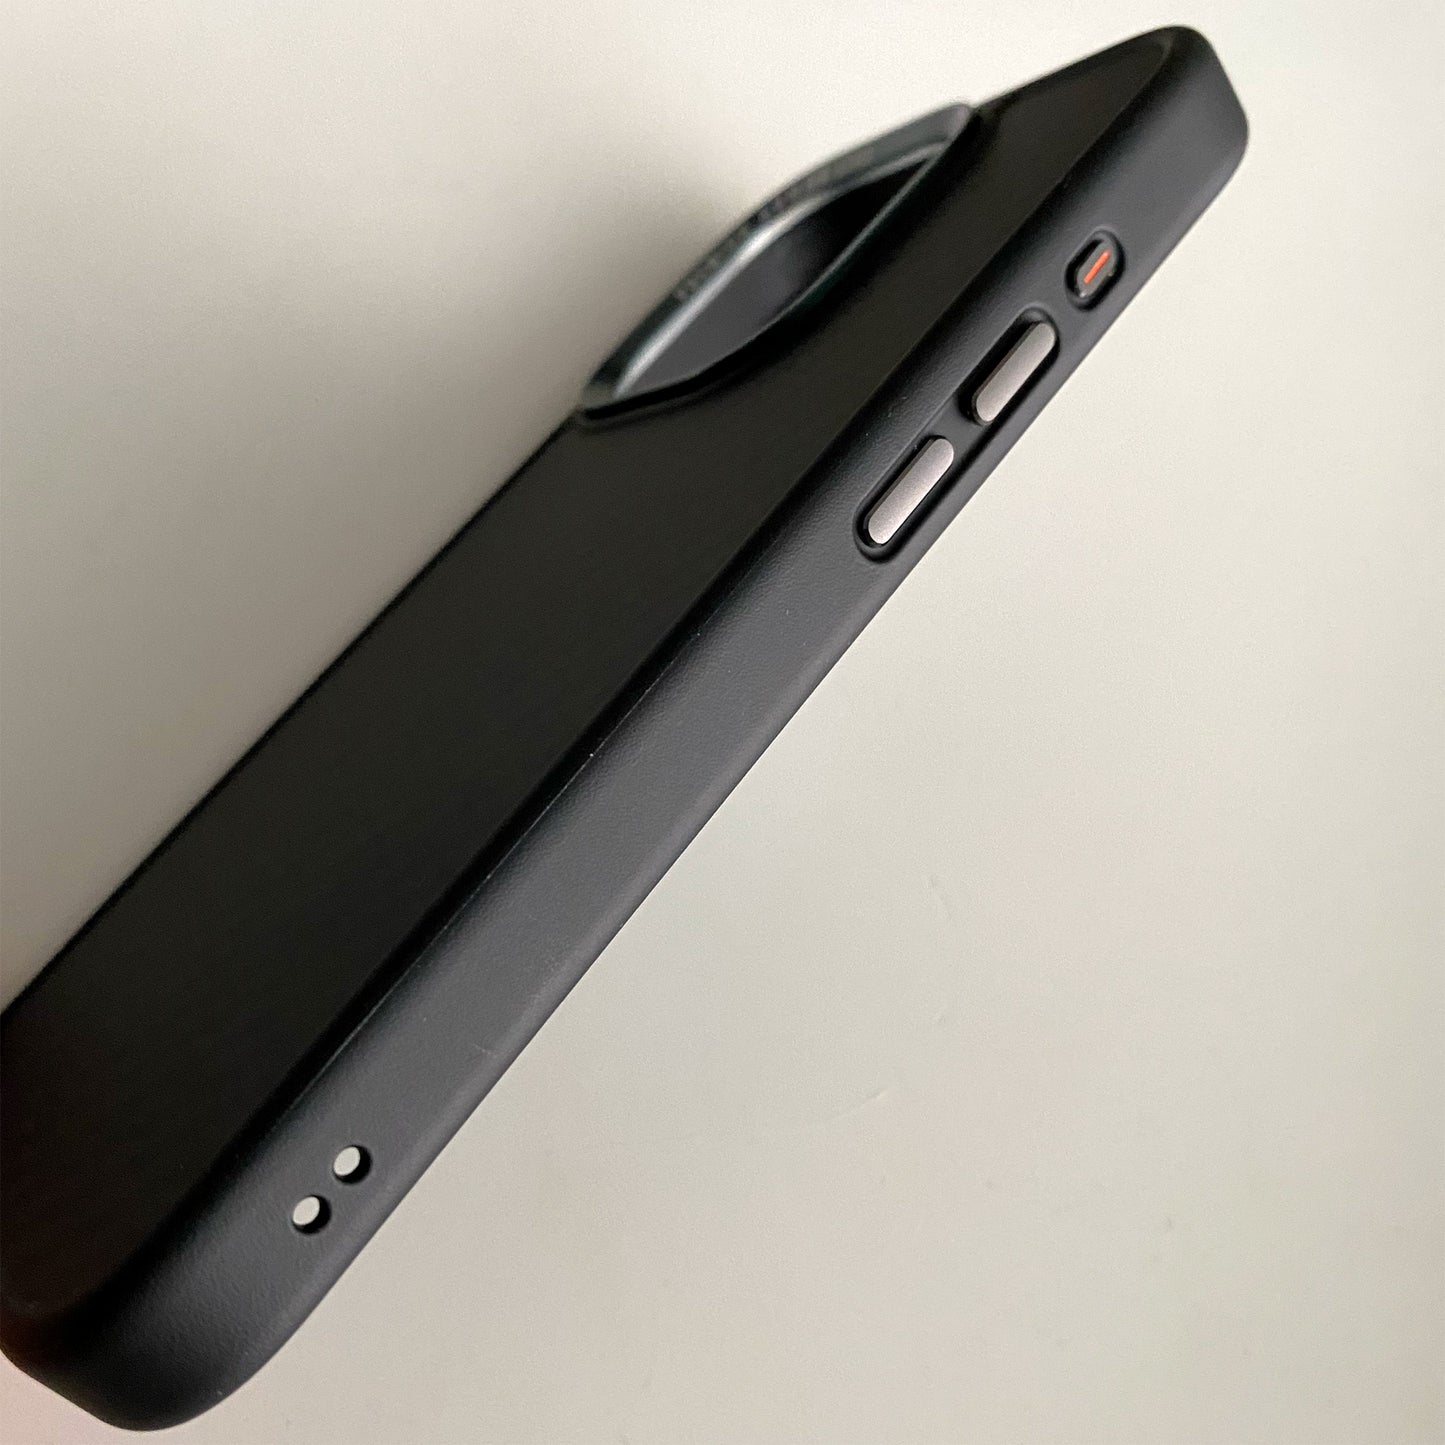 Aramid Fibre Case for iPhone (Magsafe Compatible)